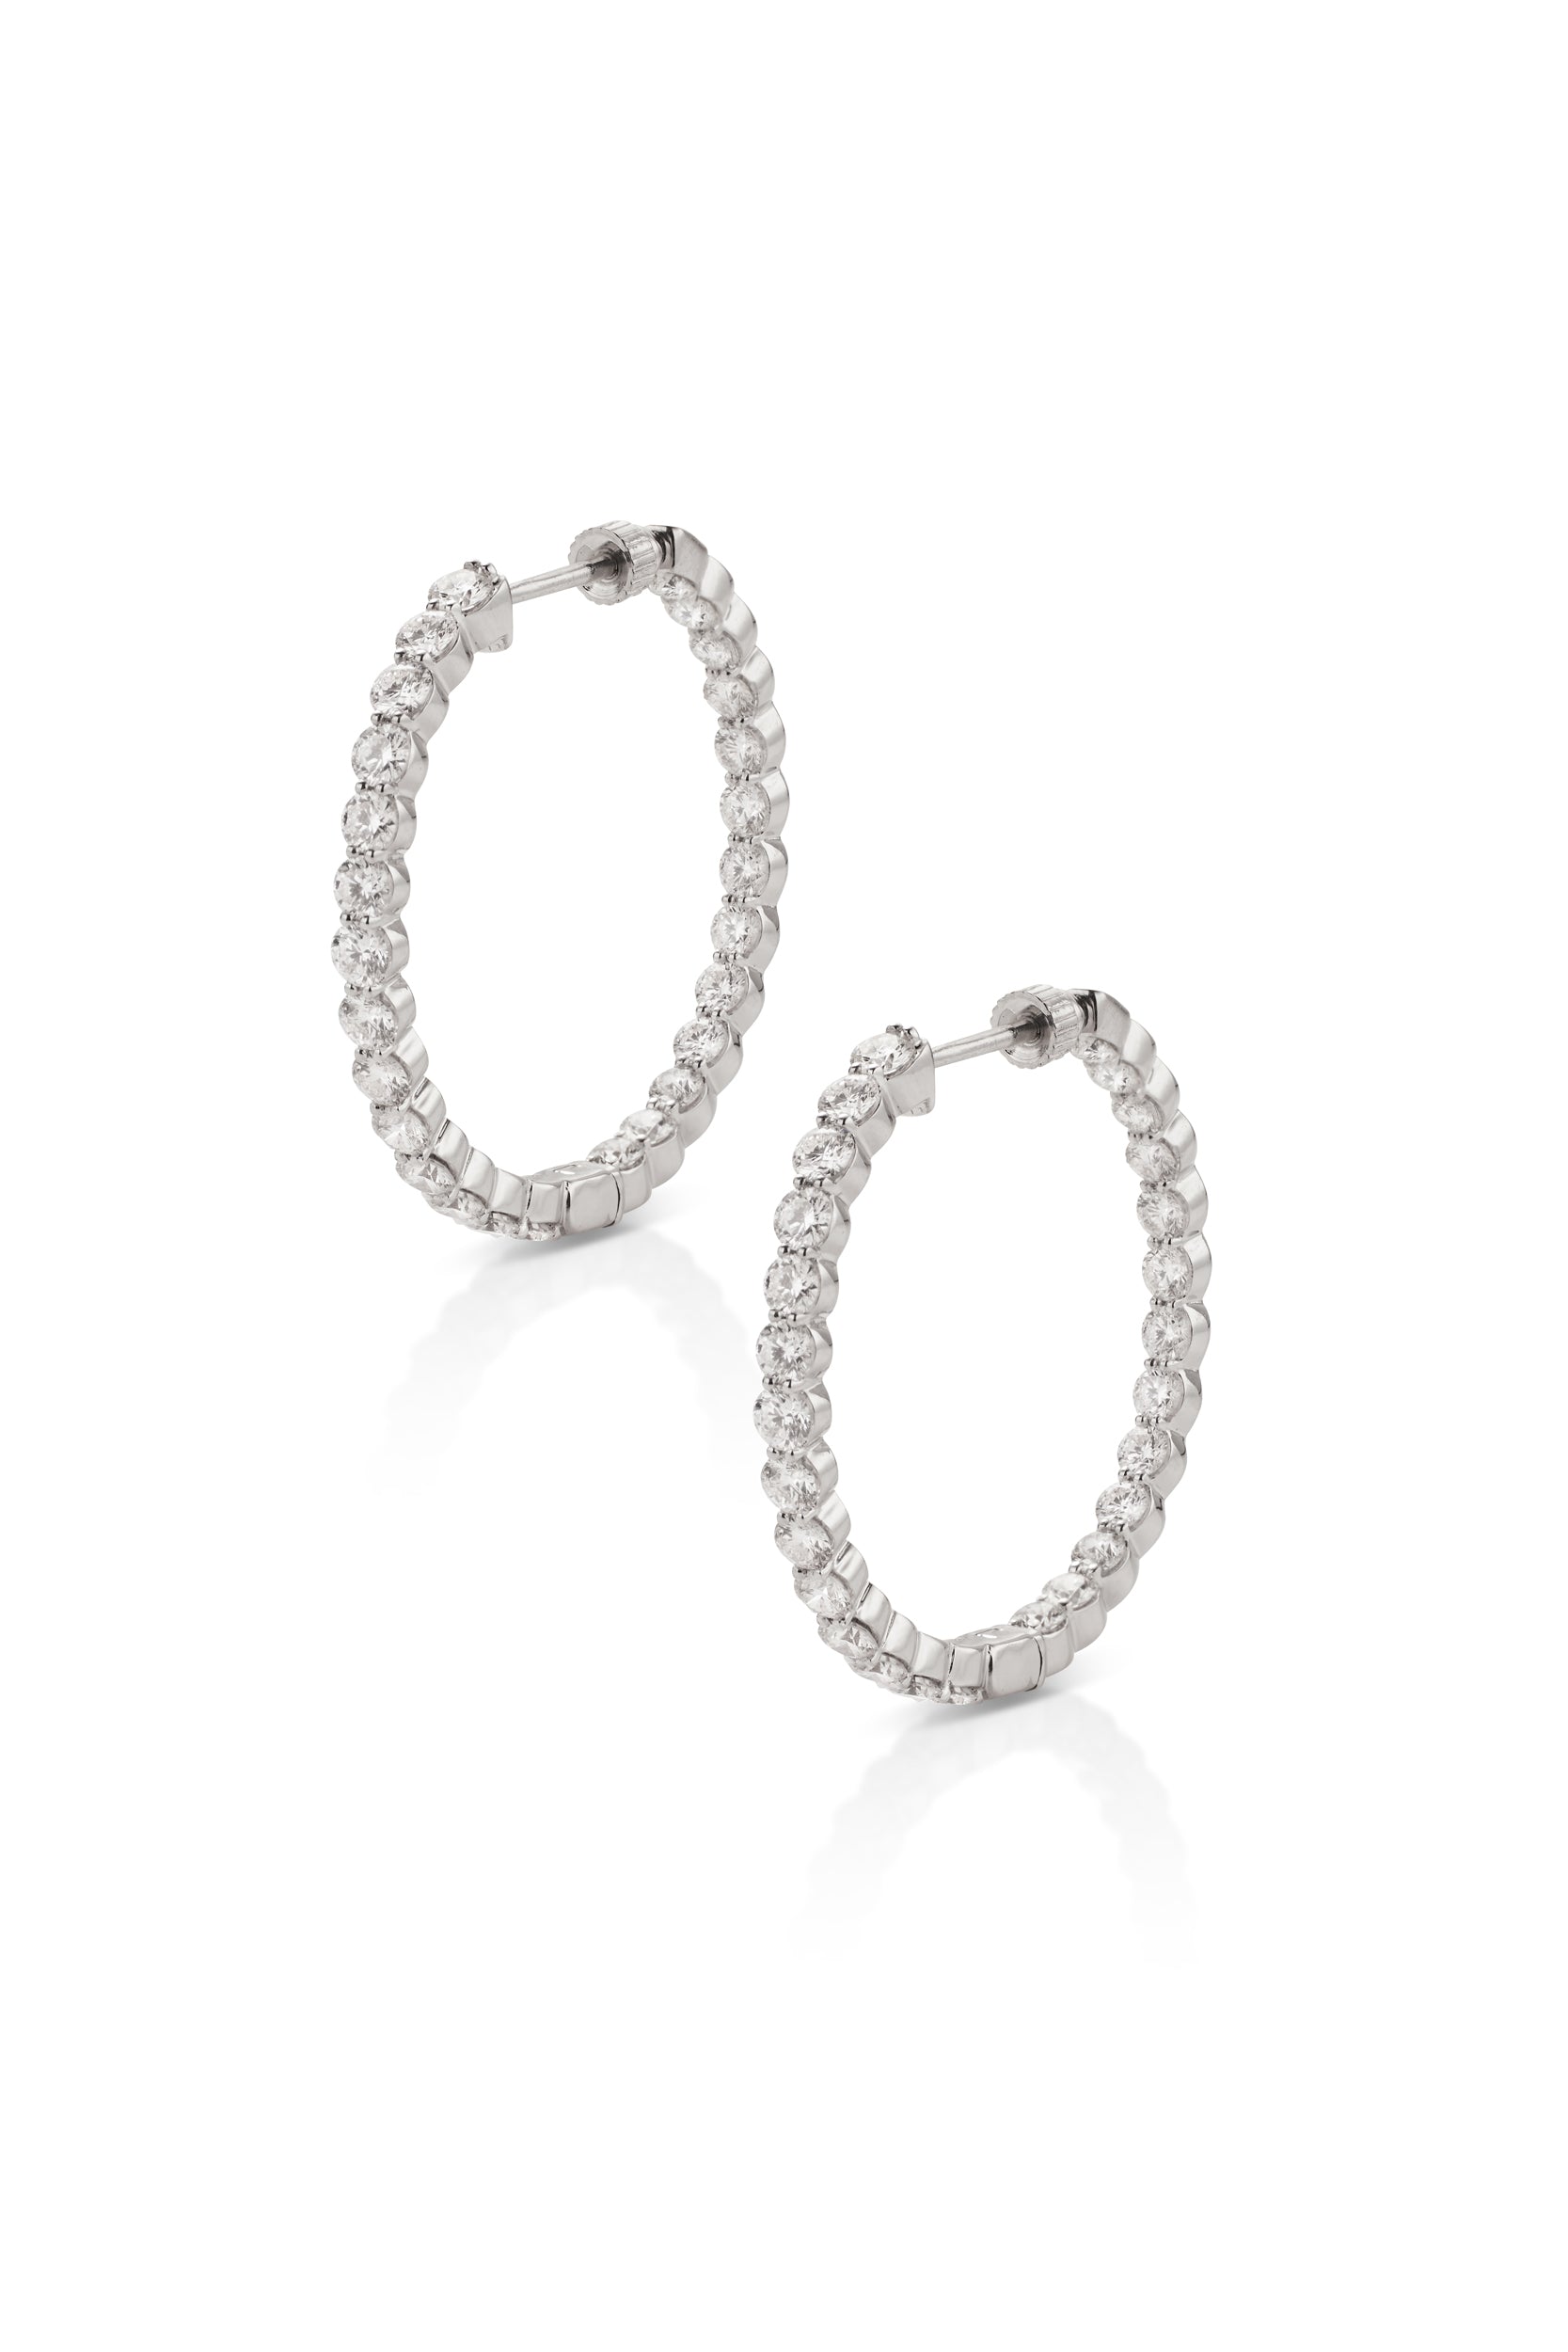 14K White Gold 25mm Round Inside Out Diamond Hoop Earrings